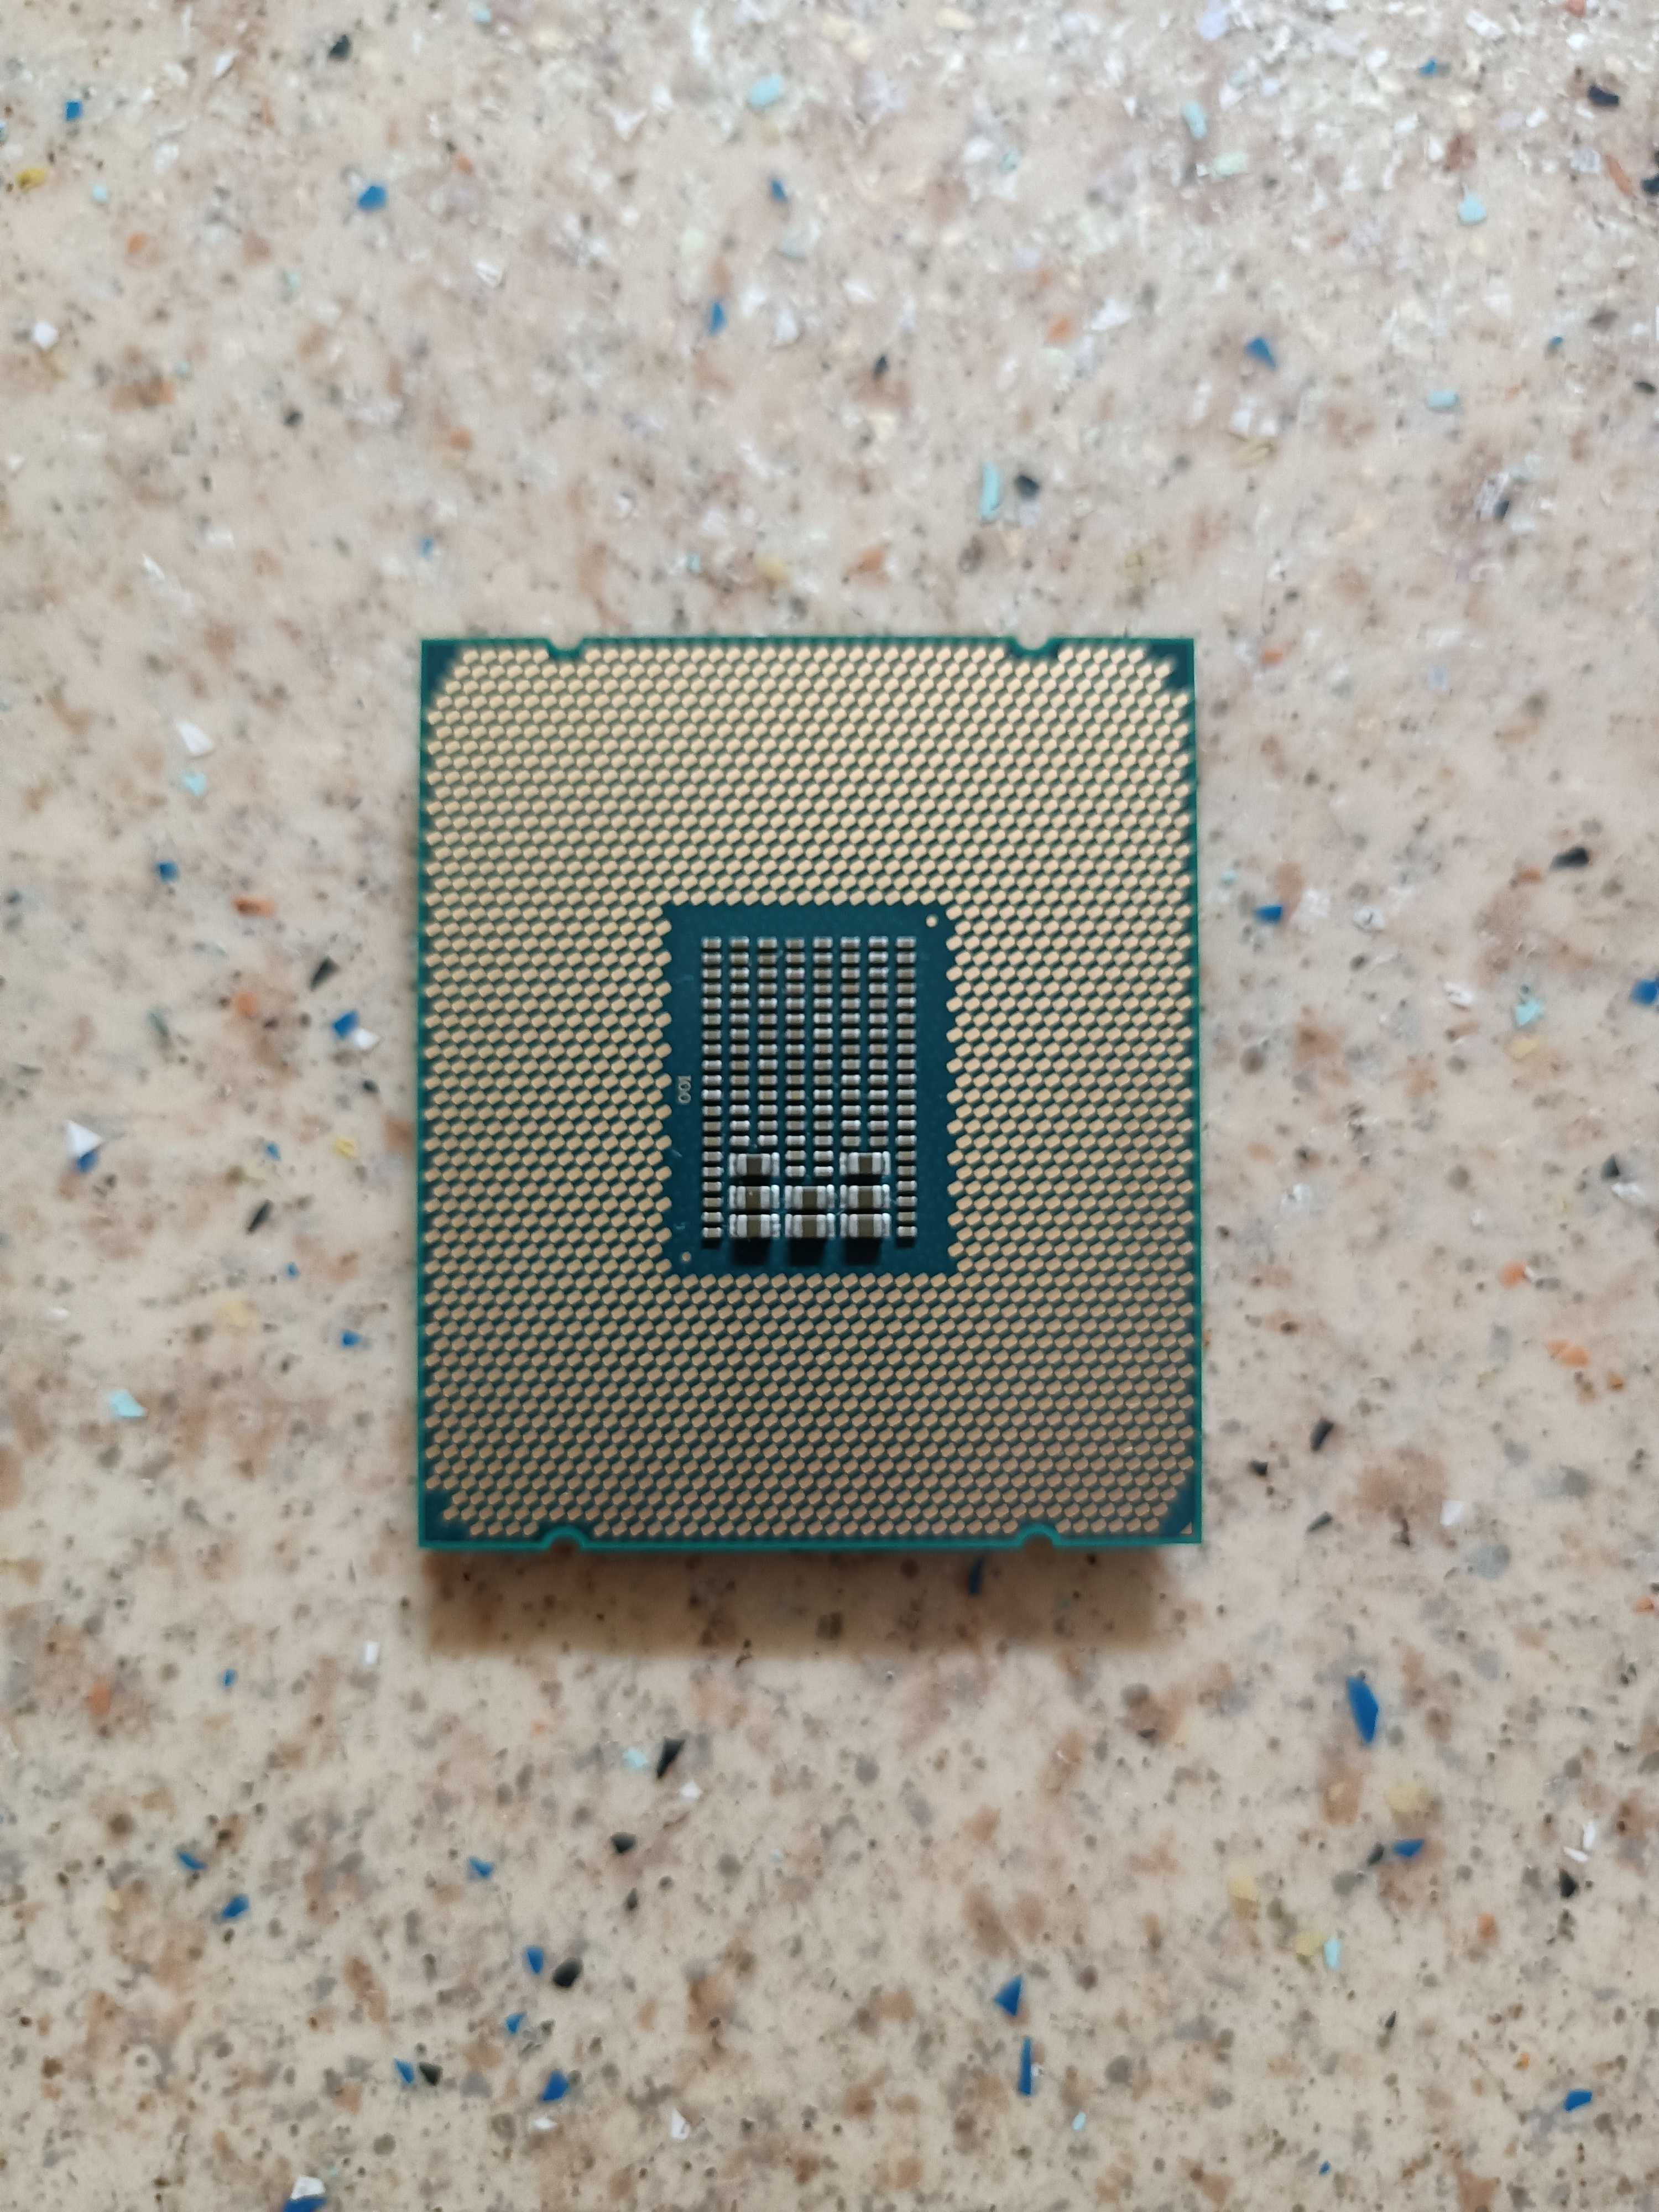 Процессор Intel Xeon E5 1650 v4 SR2P7 3.60-4.00 Ghz 2011-3 6/12